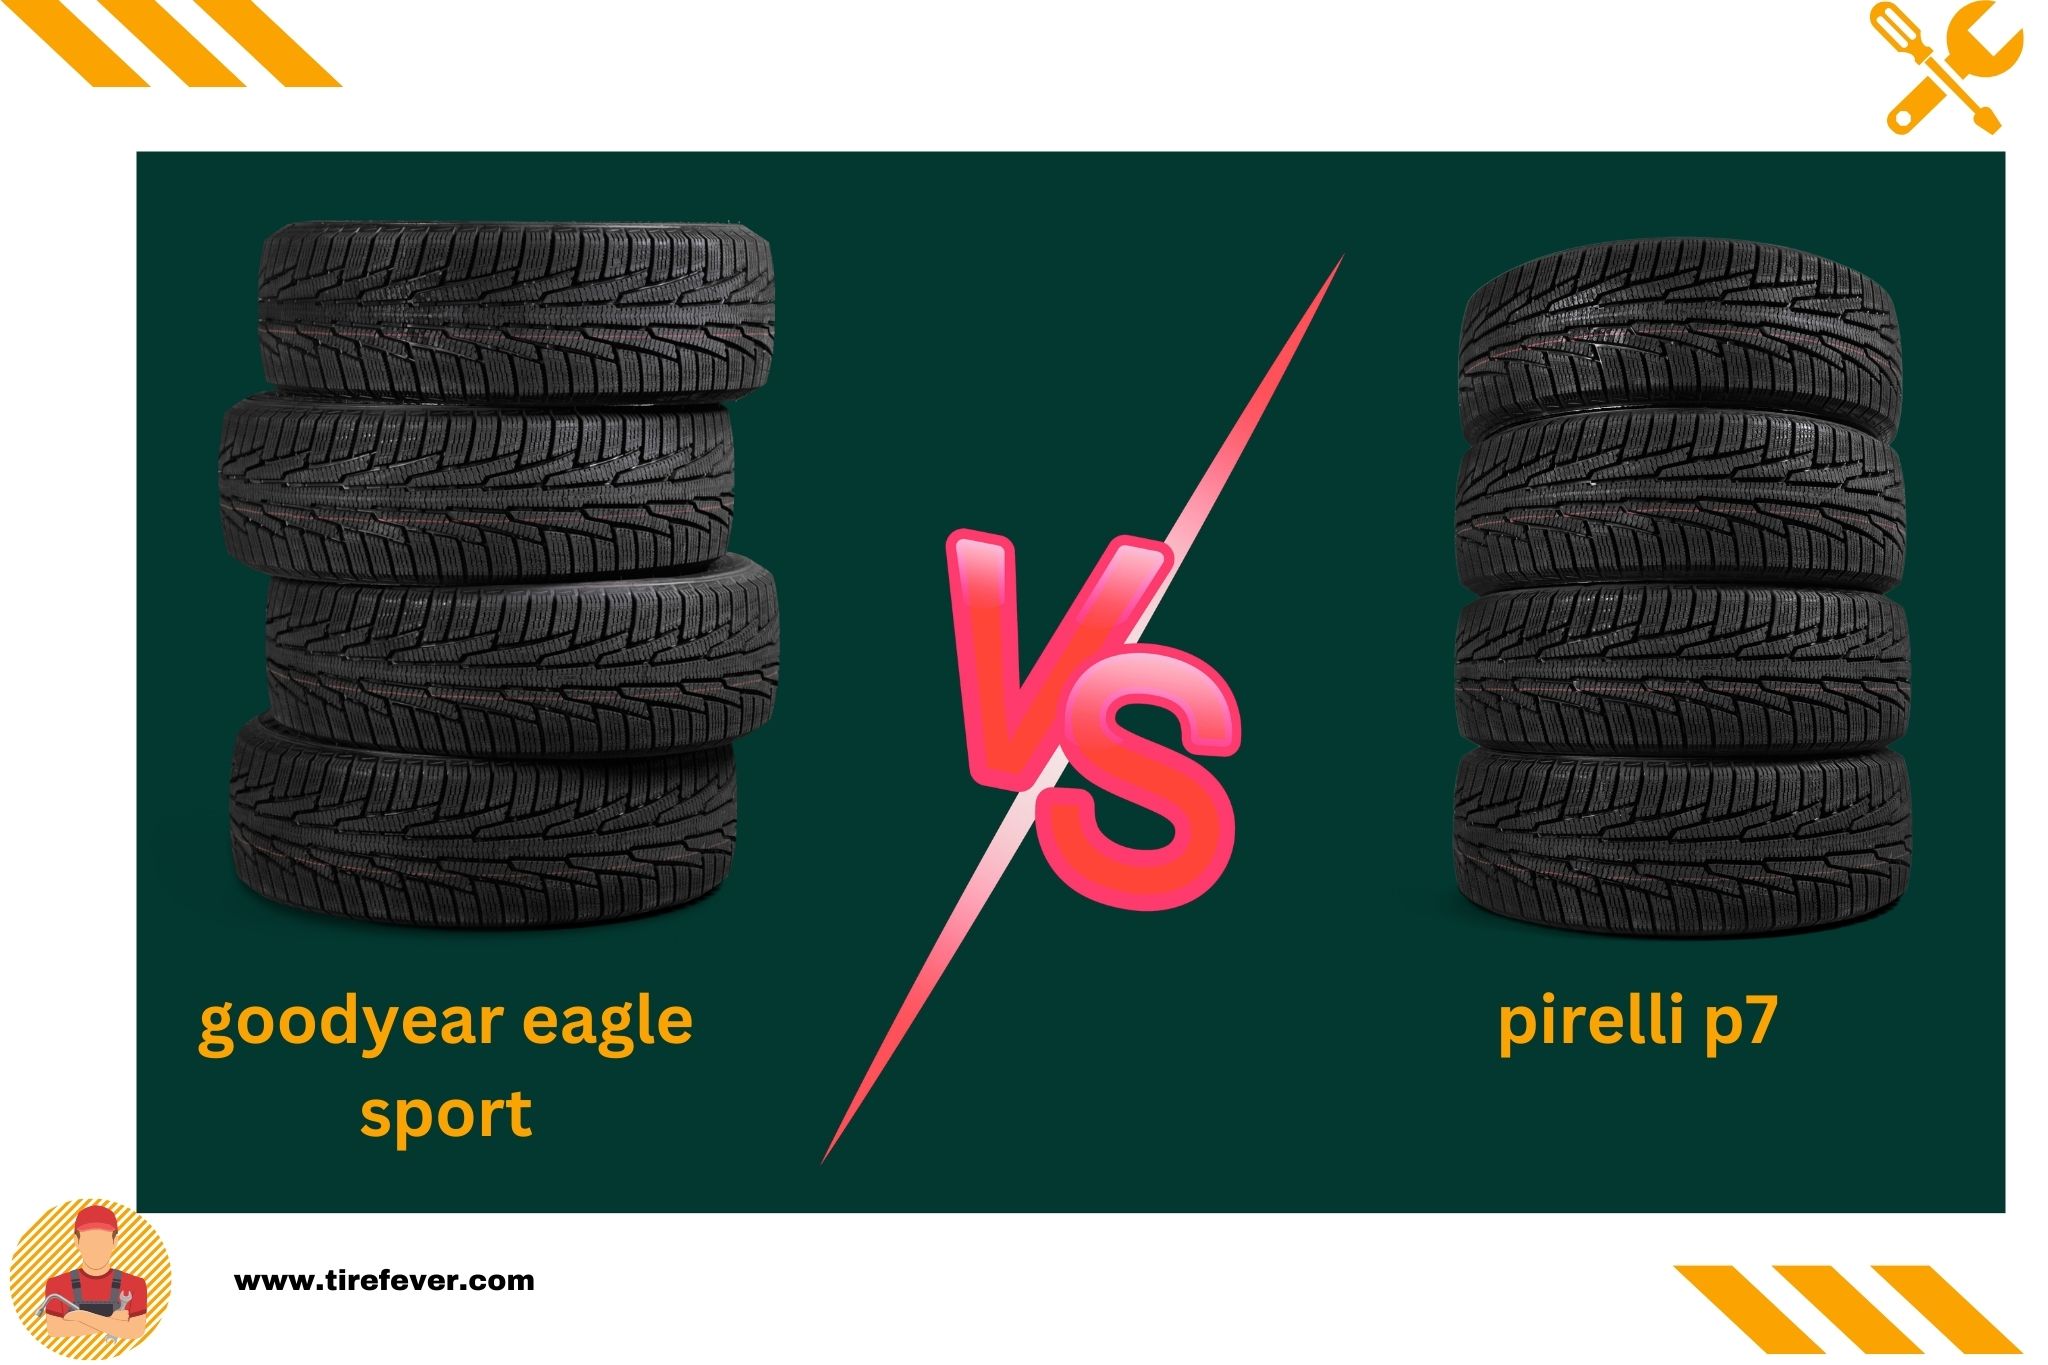 goodyear eagle sport vs pirelli p7